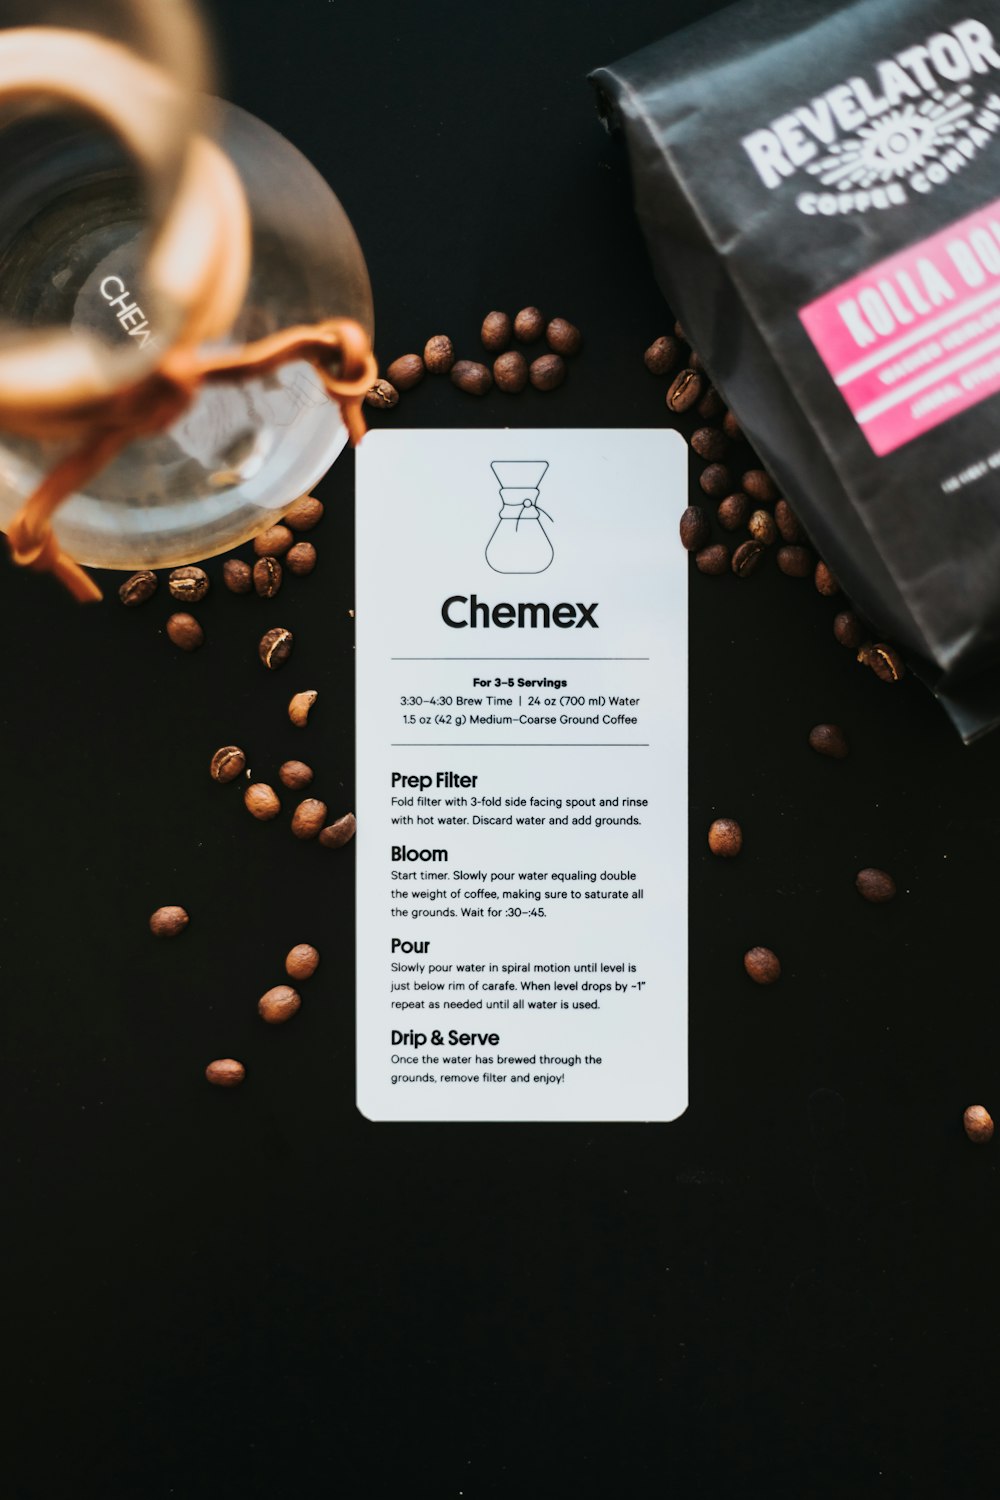 Chemex coffee label